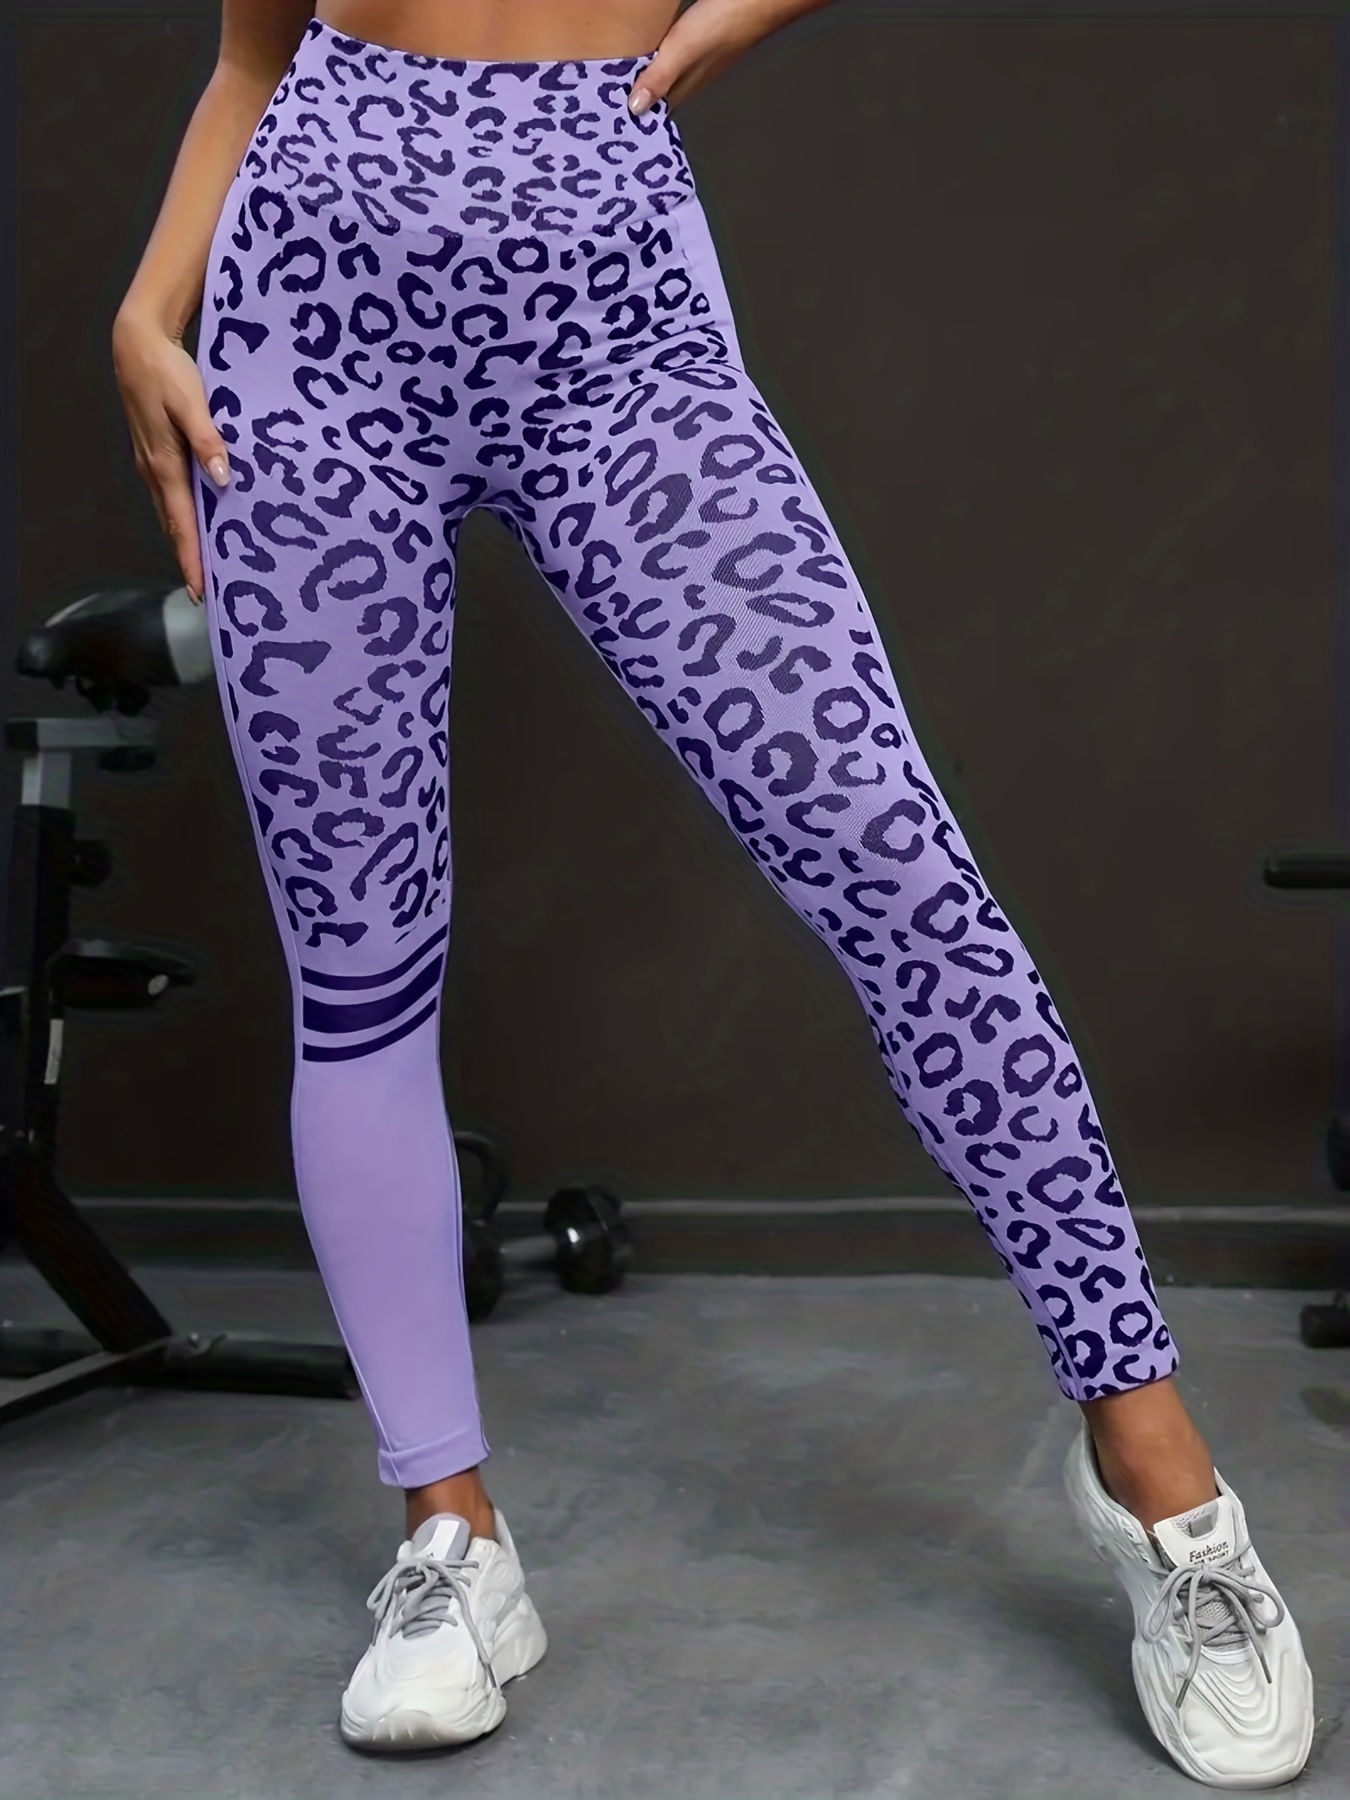 Leopard Leggings Women for Gym Lycra Fitness Workout Legging Sport